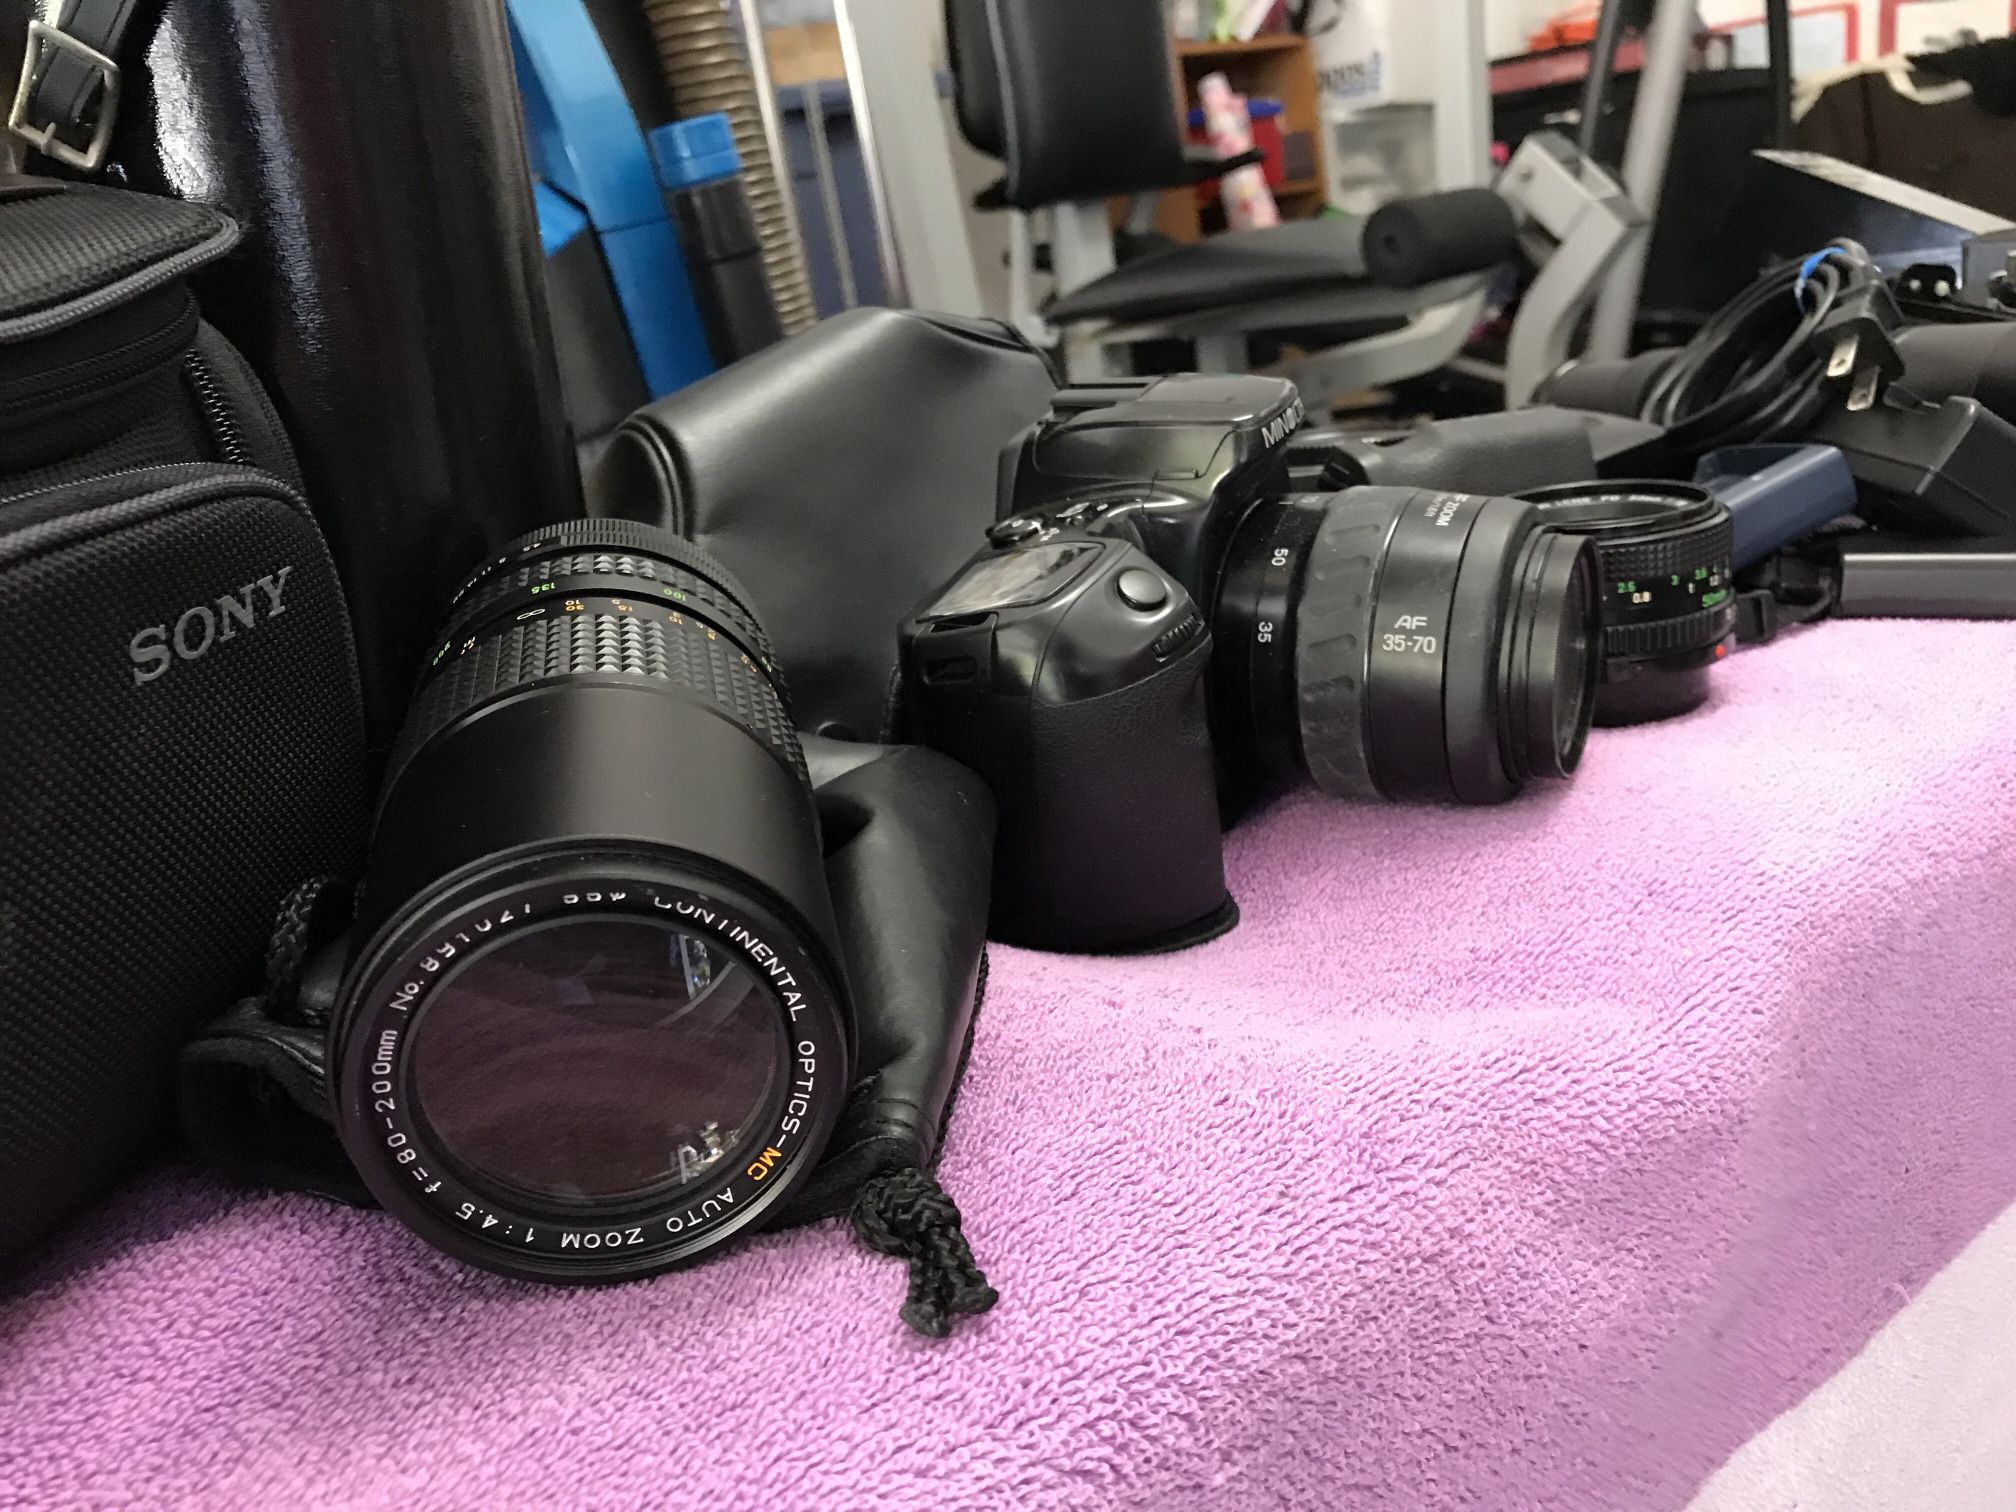 Camera Equipment … Cameras, Lenses, Batteries Etc